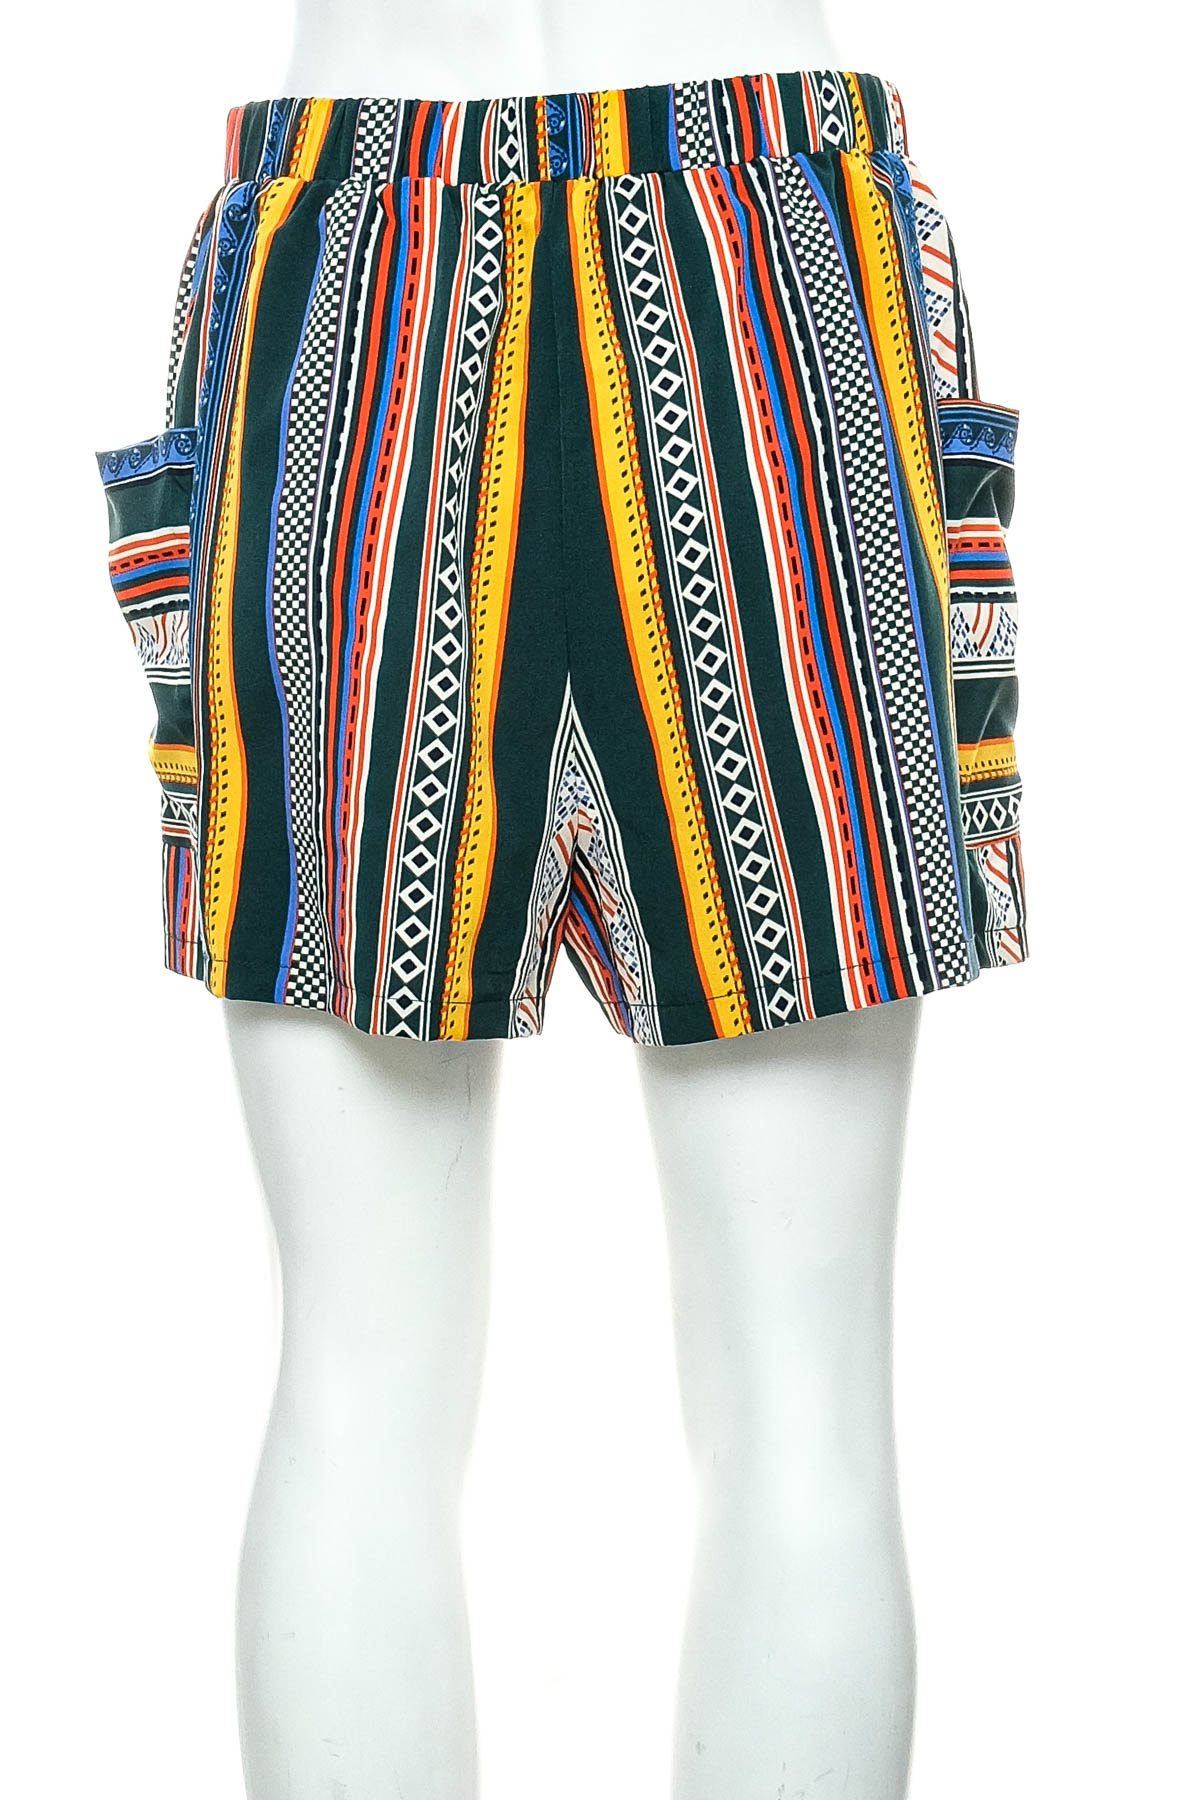 Female shorts - SHEIN - 1